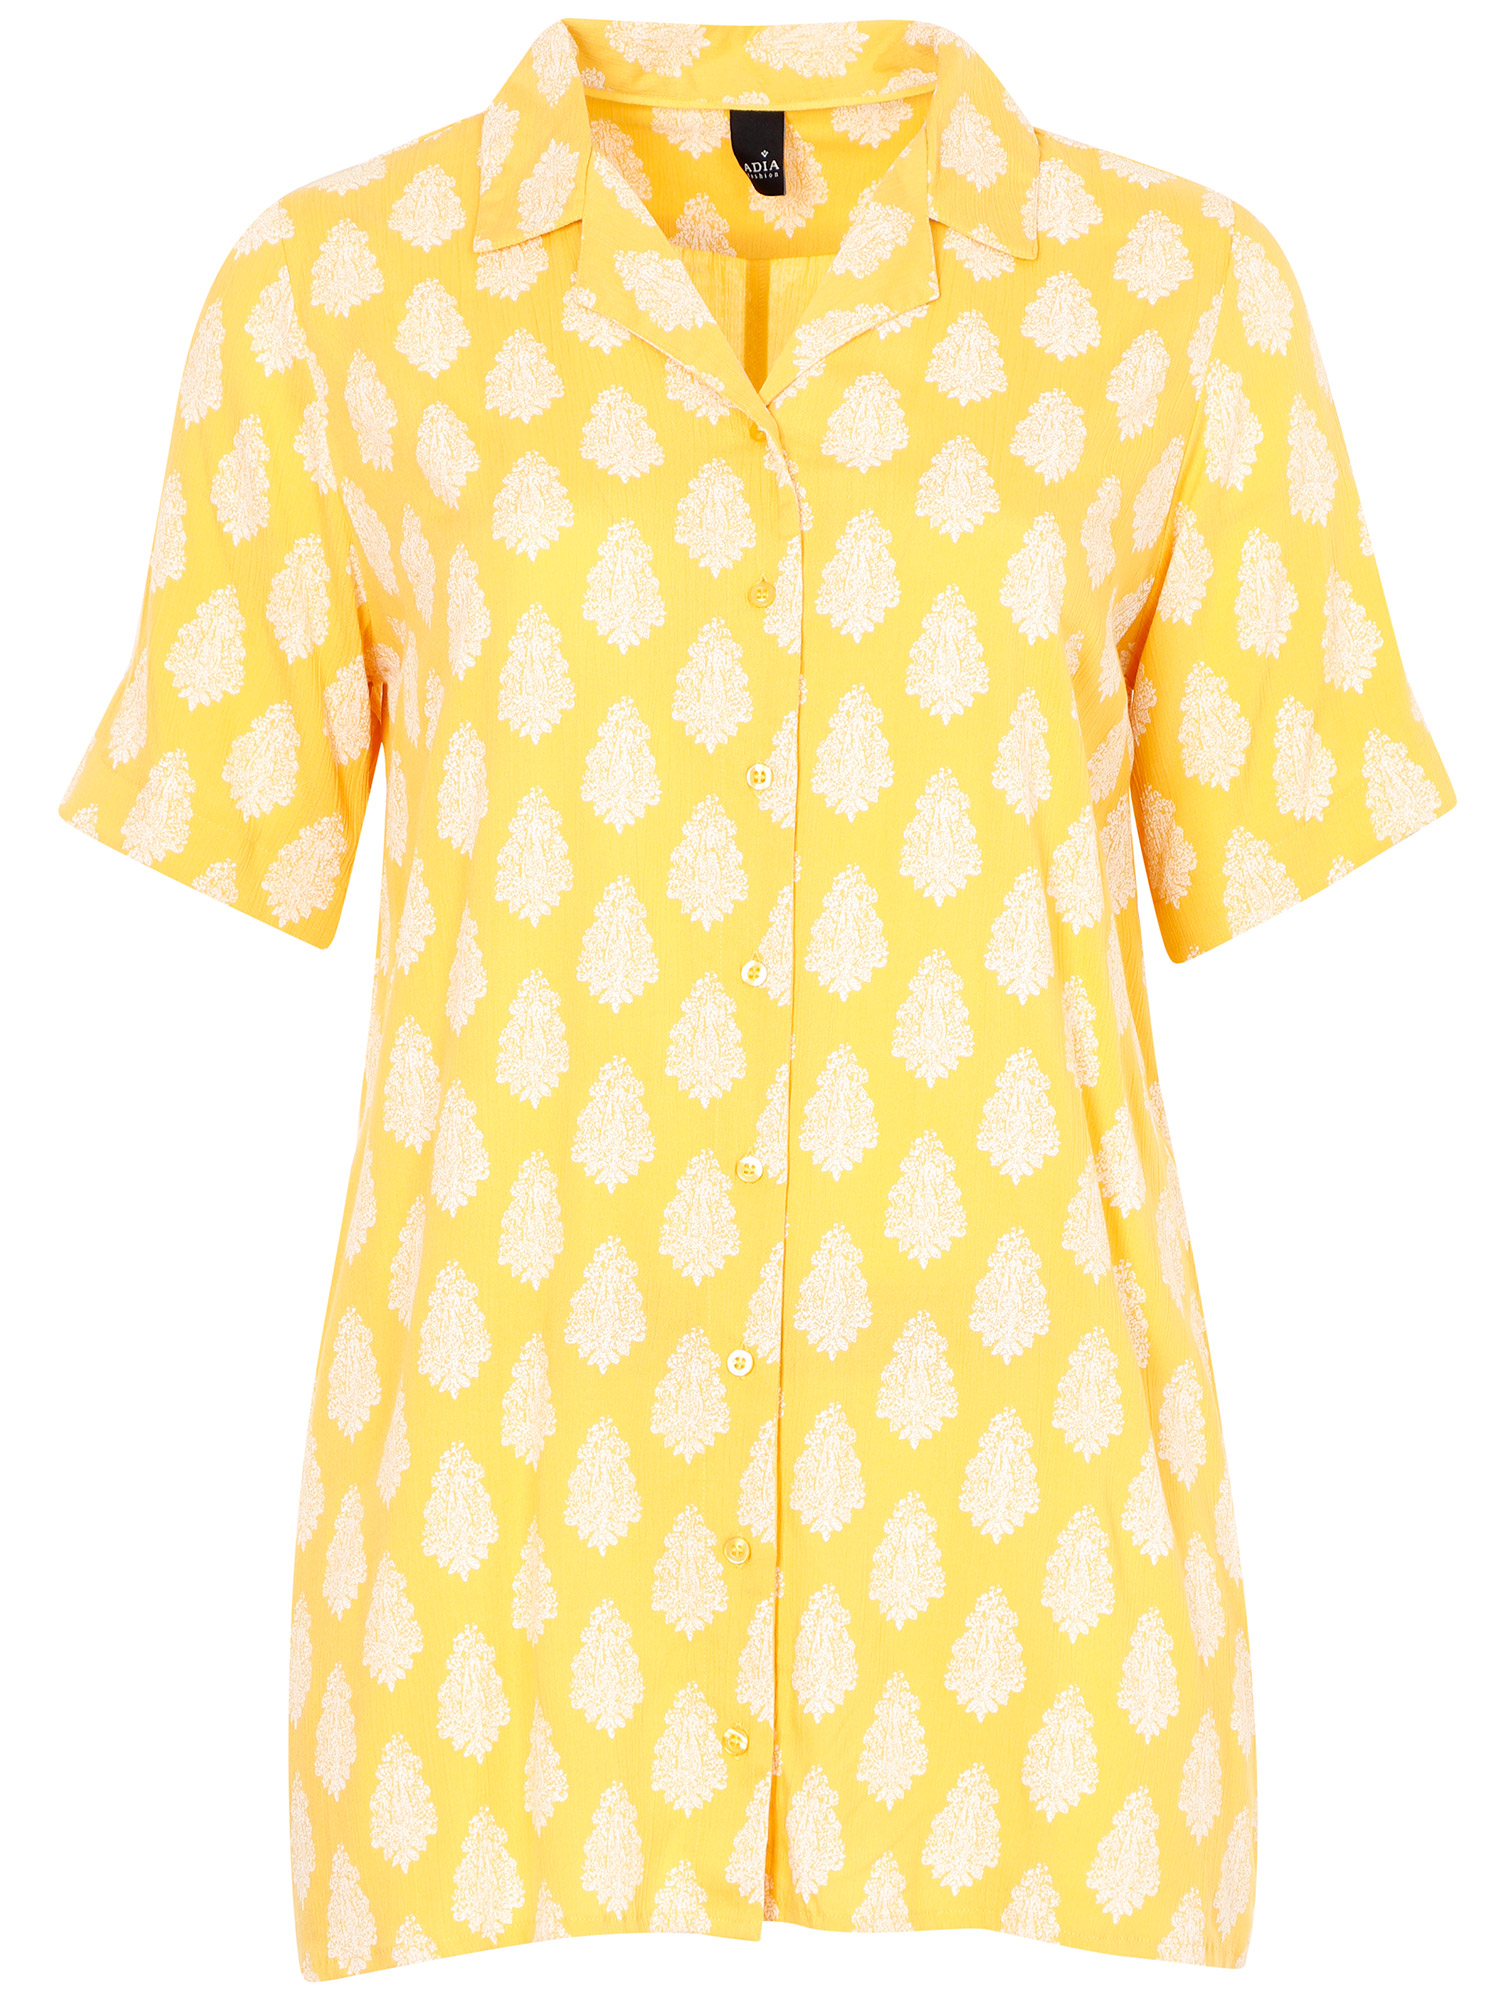 Flot gul viskose skjorte med hvid print fra Adia